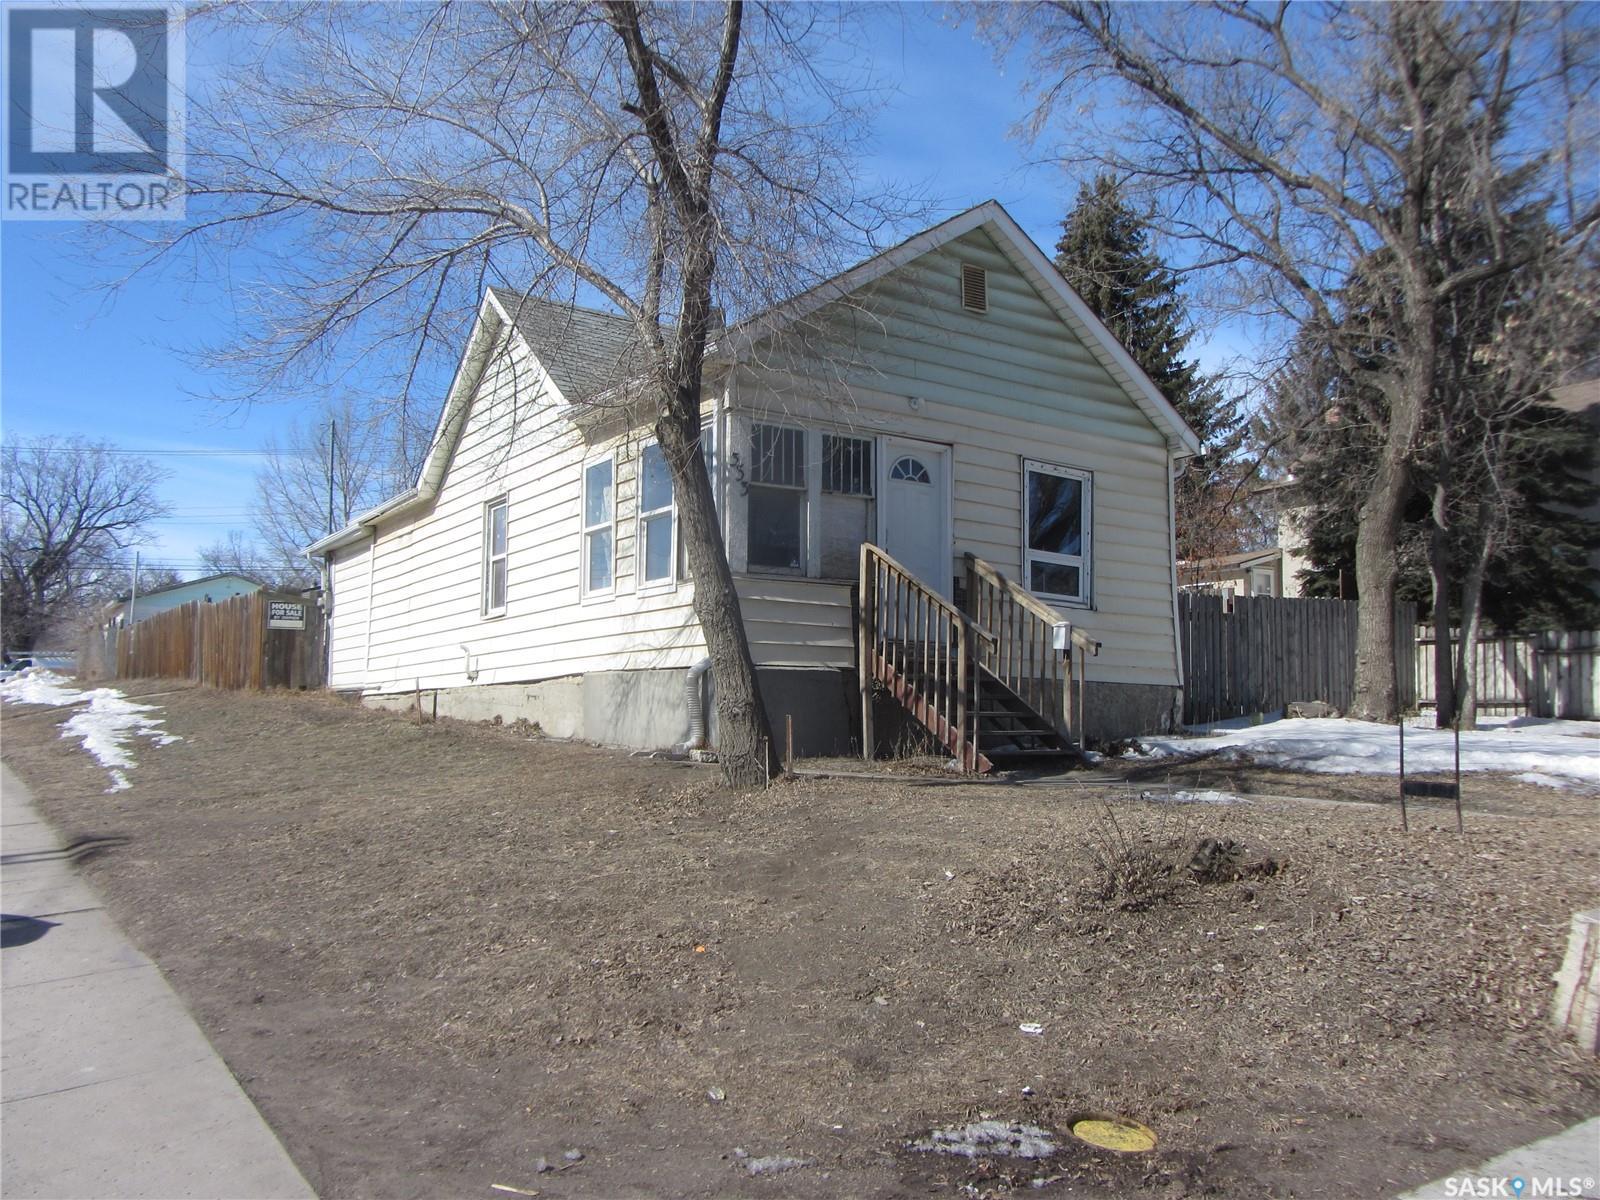 2 Bedroom Residential Home For Sale | 353 P Avenue S | Saskatoon | S7M2W3